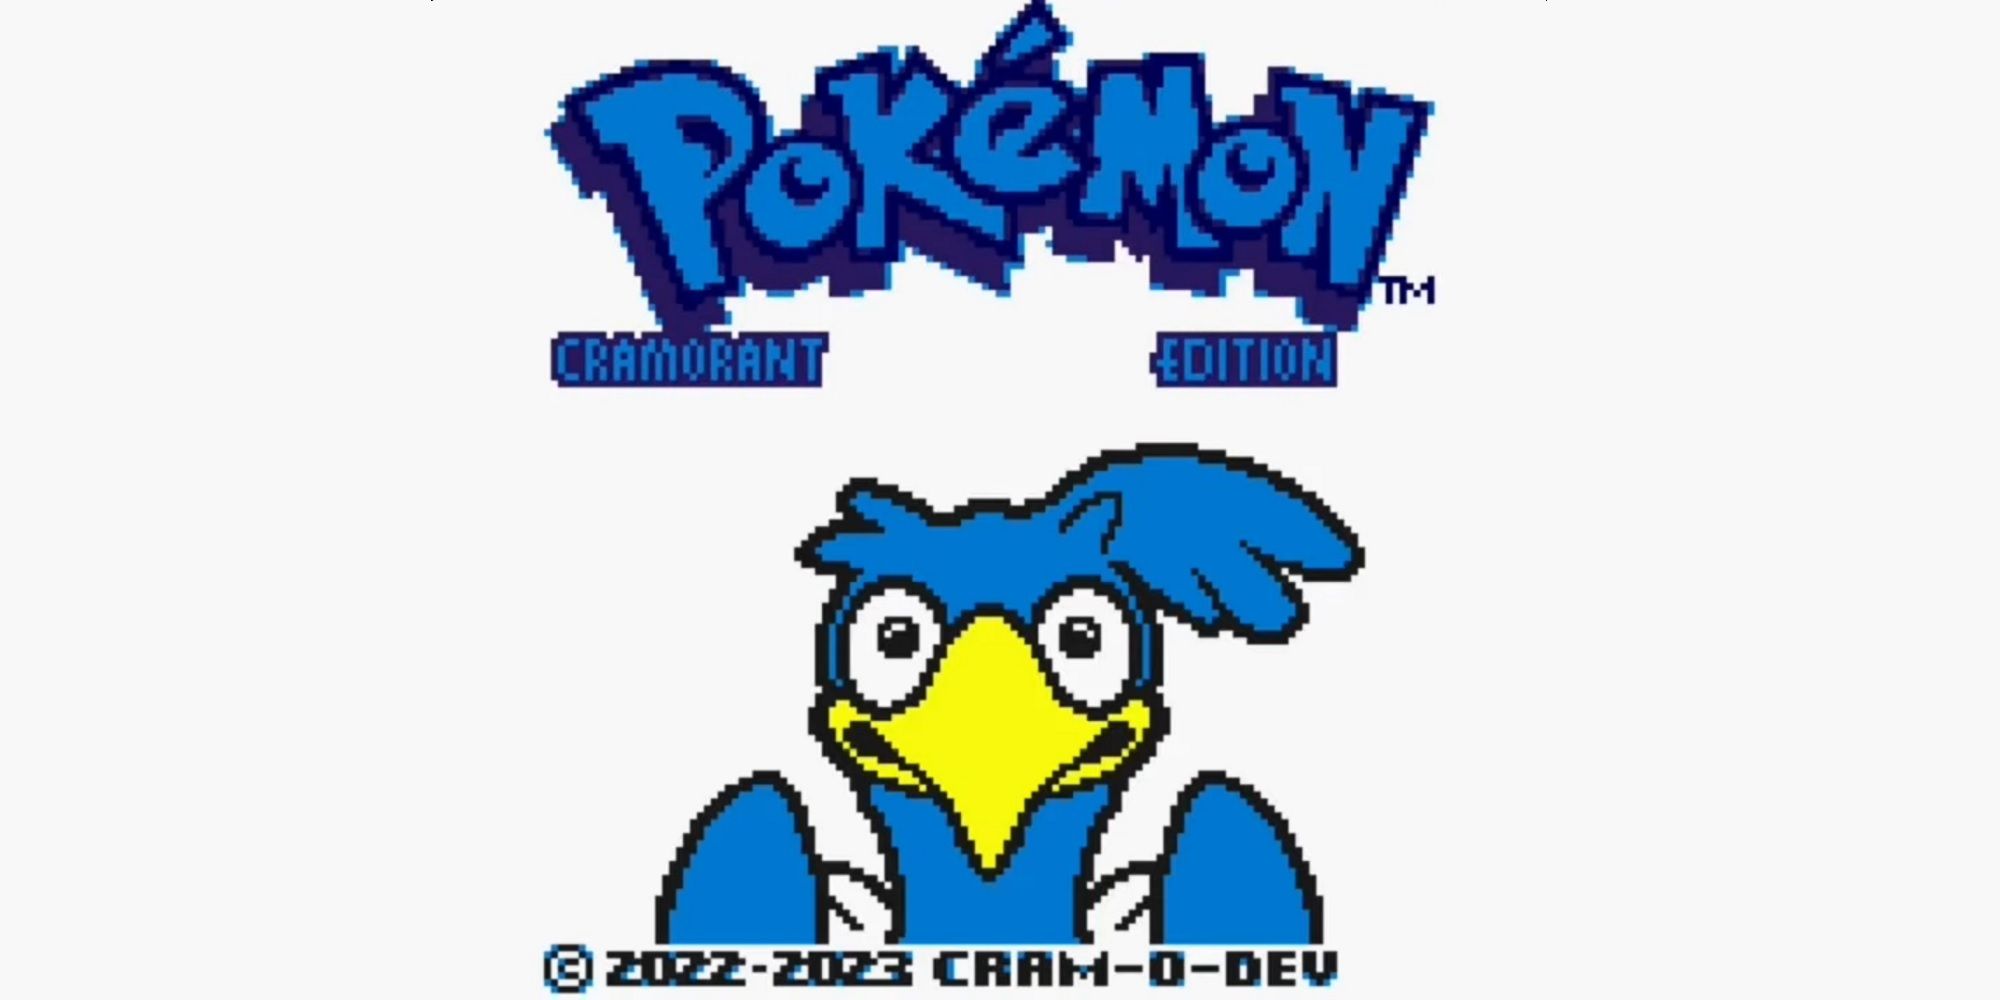 pokemon cramorant edition menu screen with pixel art cramorant